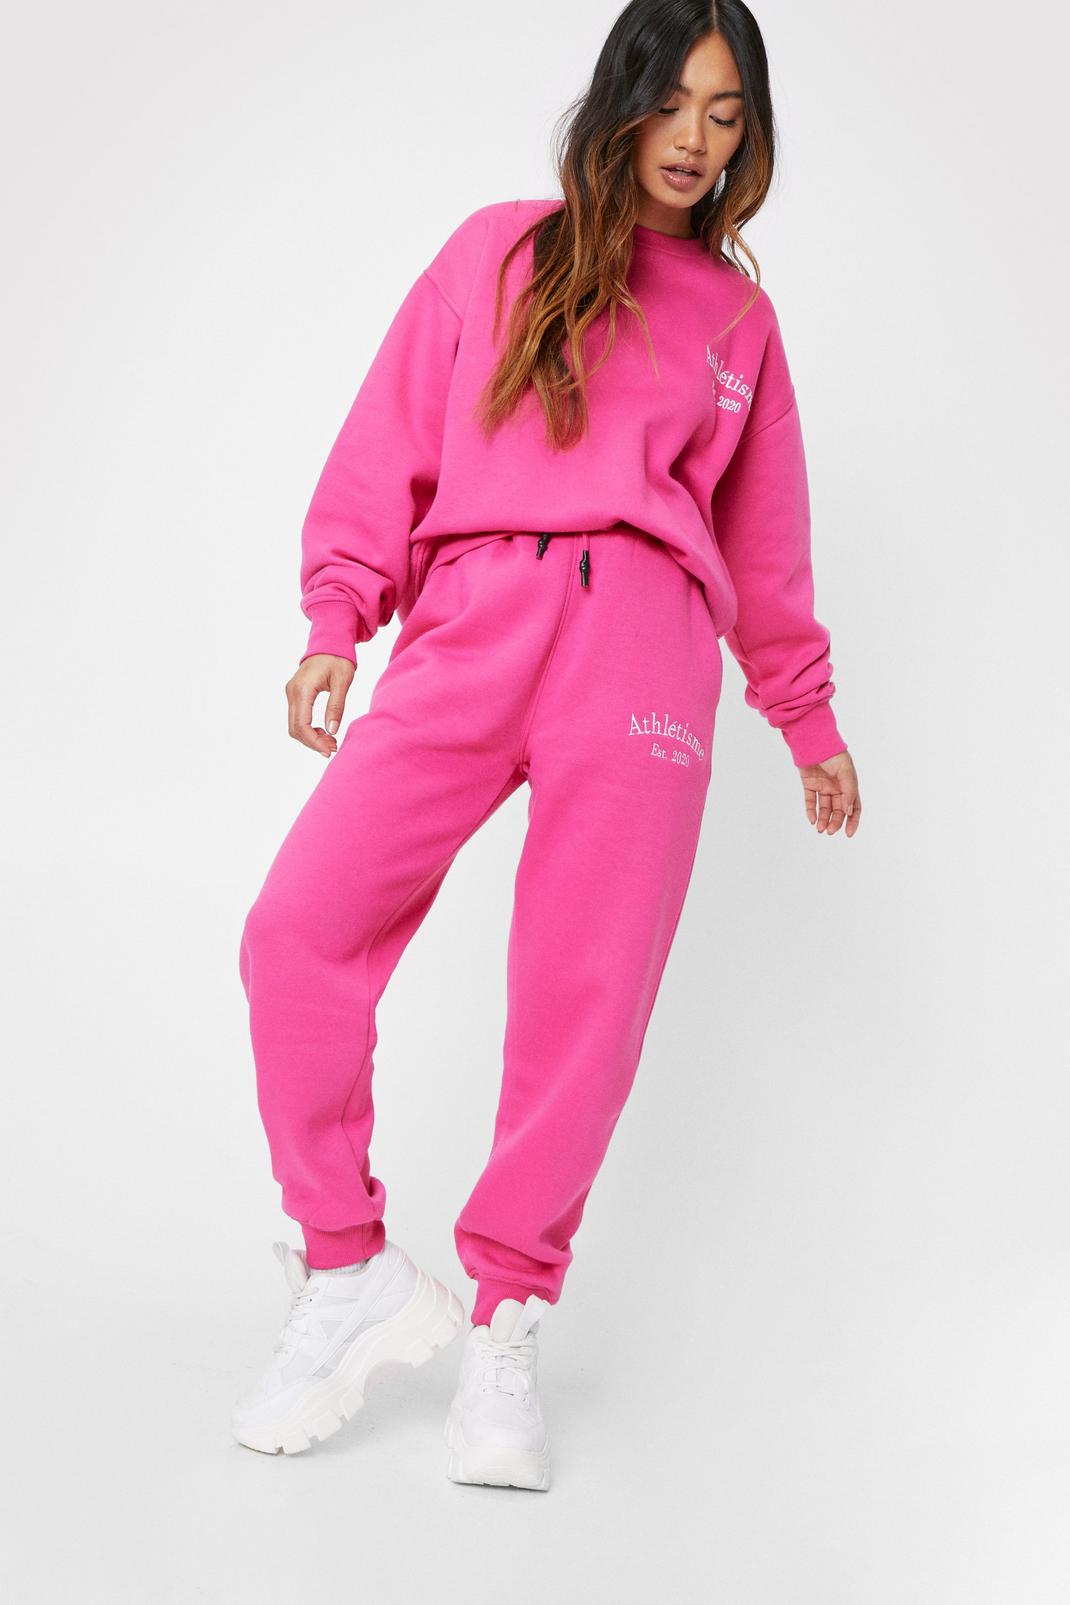 Hot pink Petite Athletisme Embroidered Sweatpants image number 1